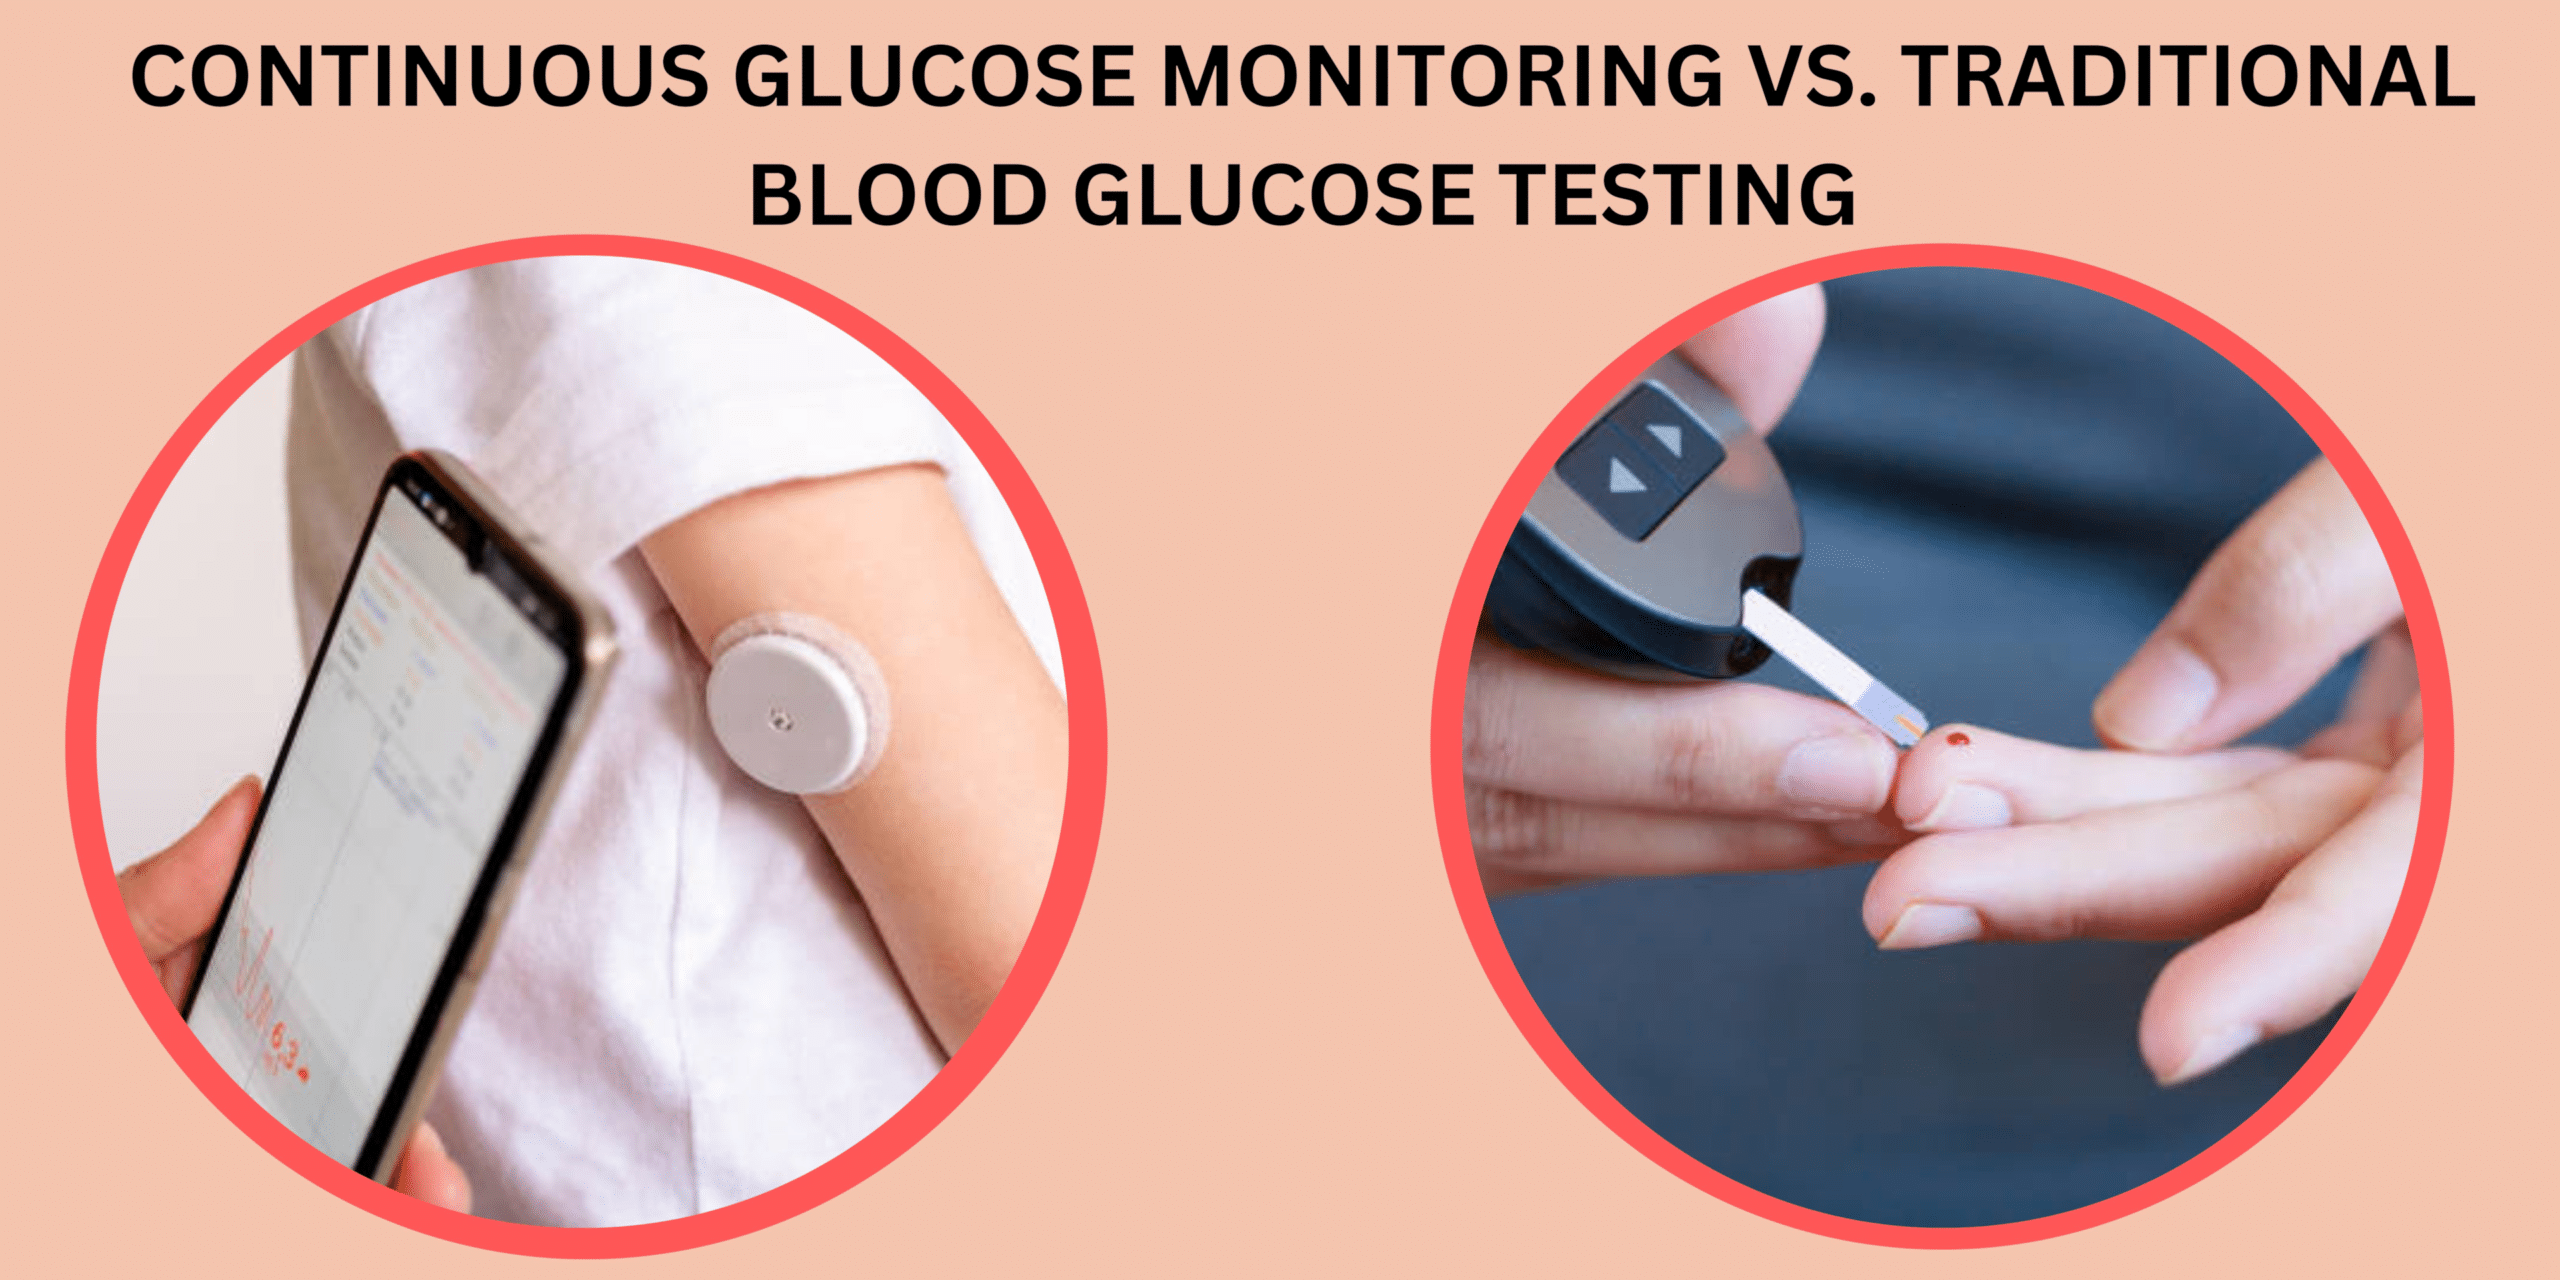 Continuous Glucose Monitoring Vs အကြောင်း ဆောင်းပါးတစ်ပုဒ်၏ ပုံ။ ရိုးရာသွေးဂလူးကို့စ်စစ်ဆေးမှု